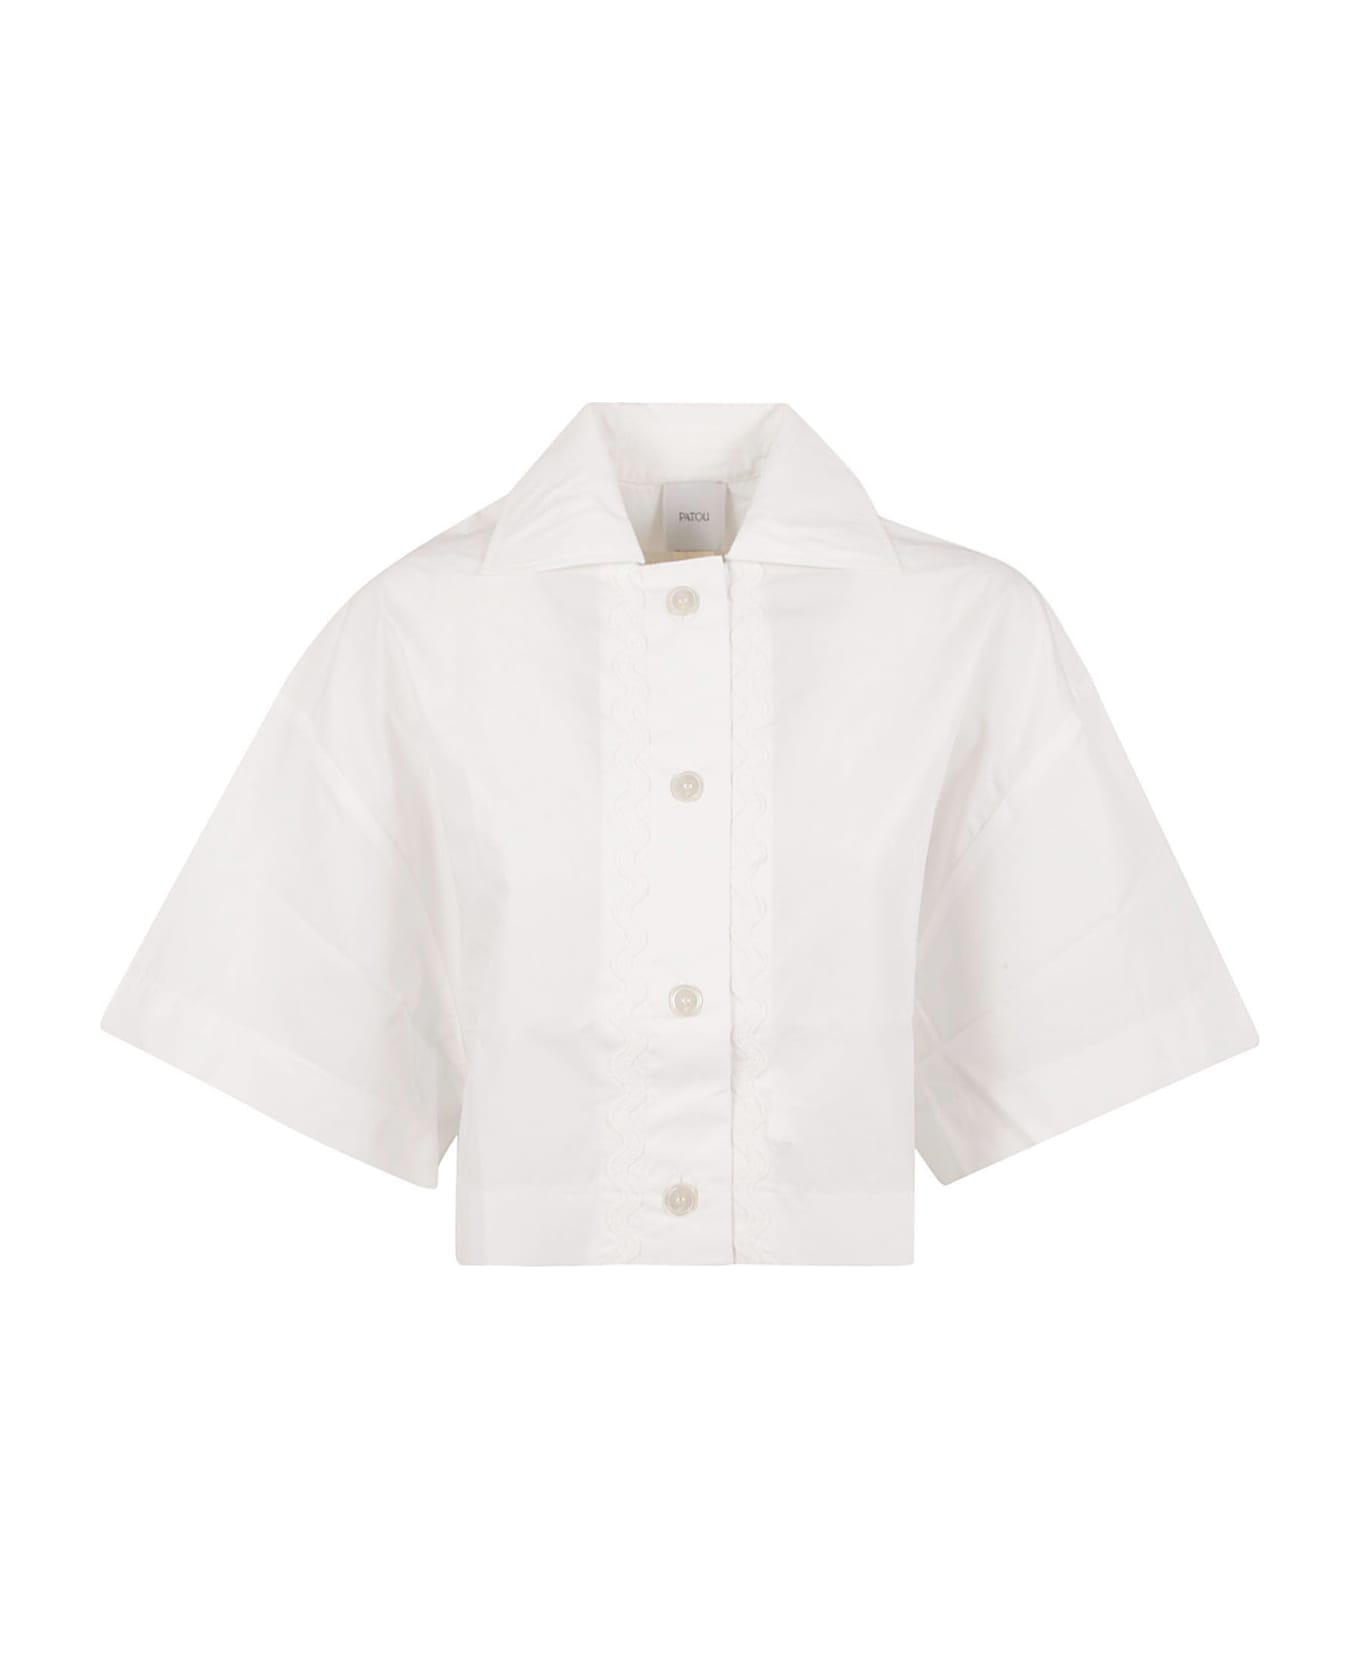 Patou Crop Shirt In White Cotton - White